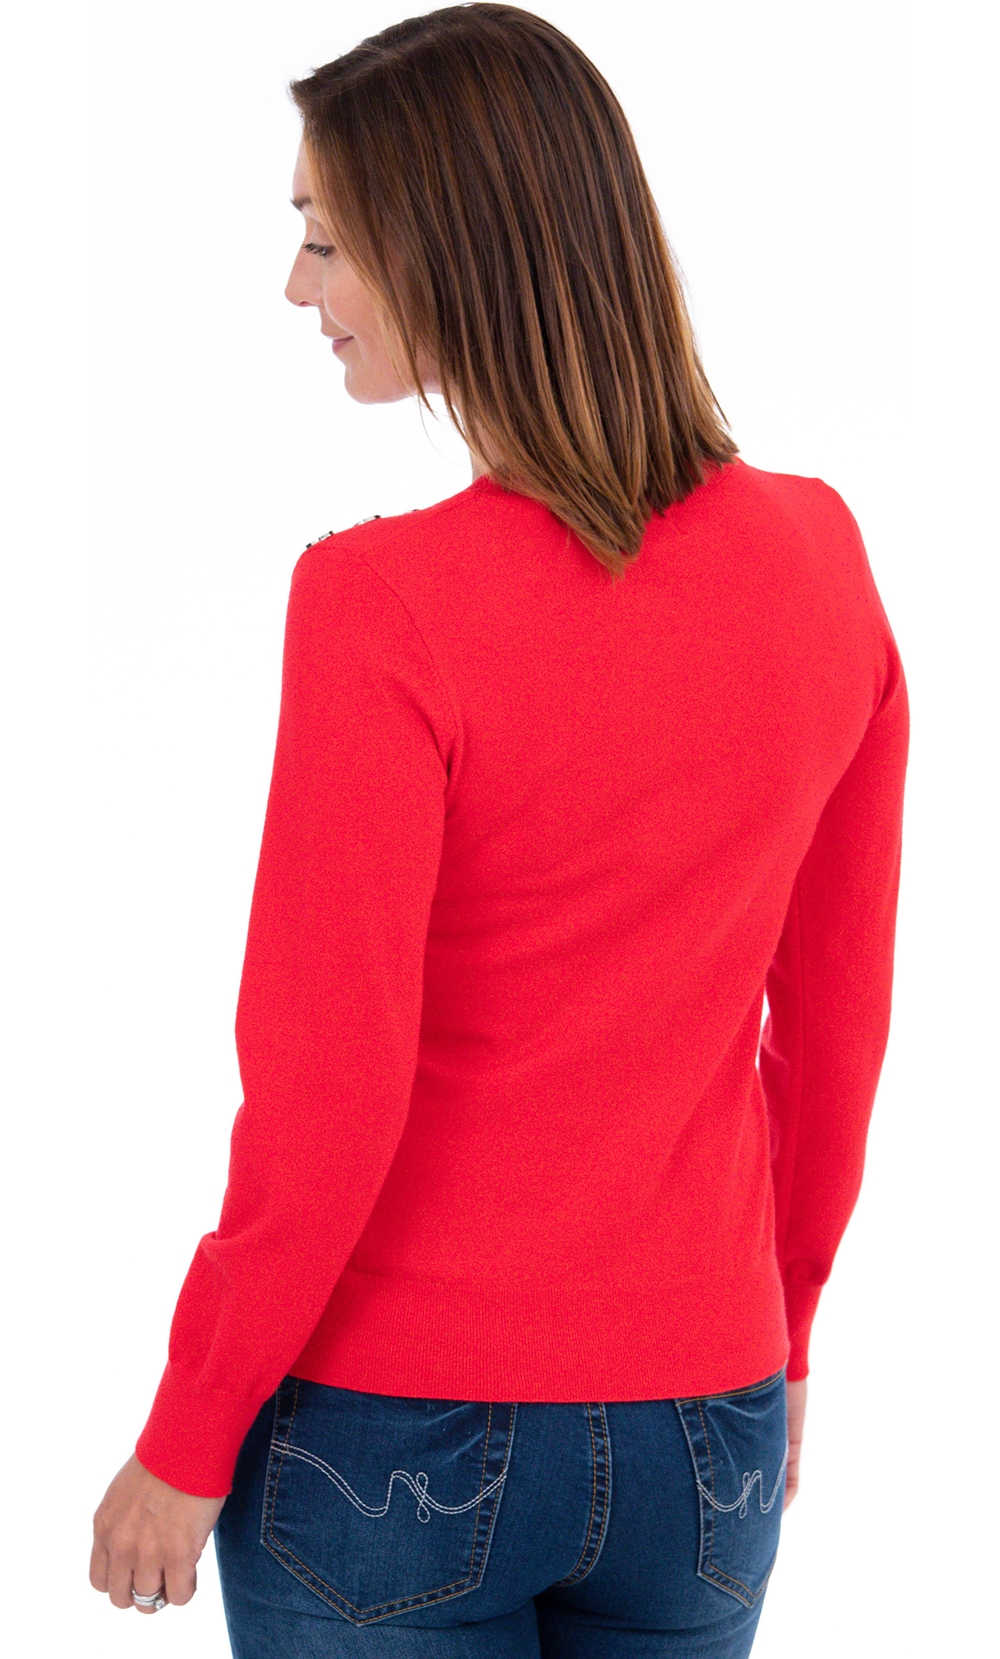 Long Sleeve Embellished Knit Top in Red | Klass